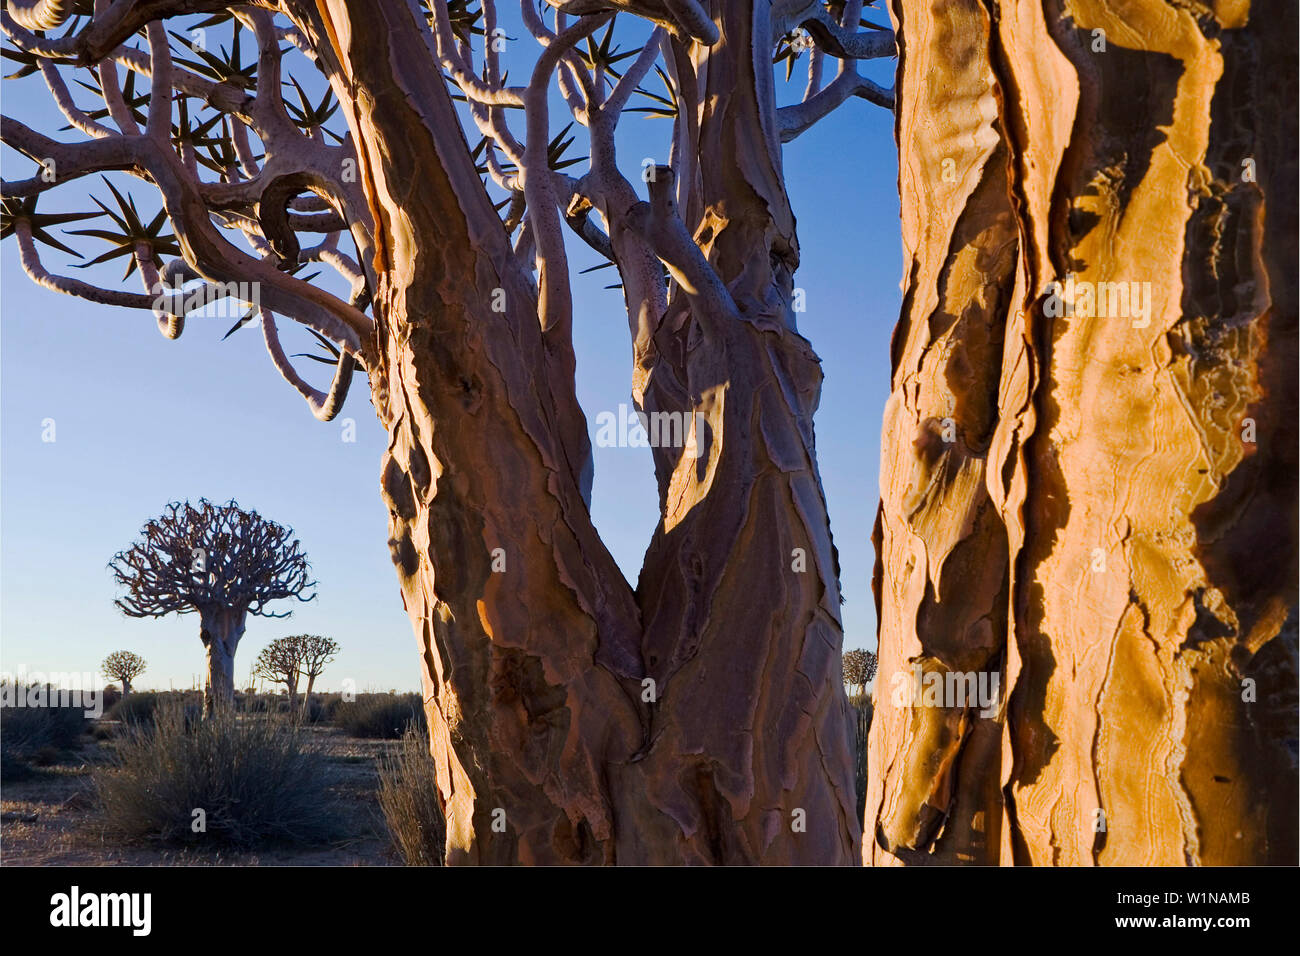 A group of Quivertrees (Aloe dichotoma). Gondwana Canon Park, Fish river canyon. Southern Namibia. Africa. Stock Photo